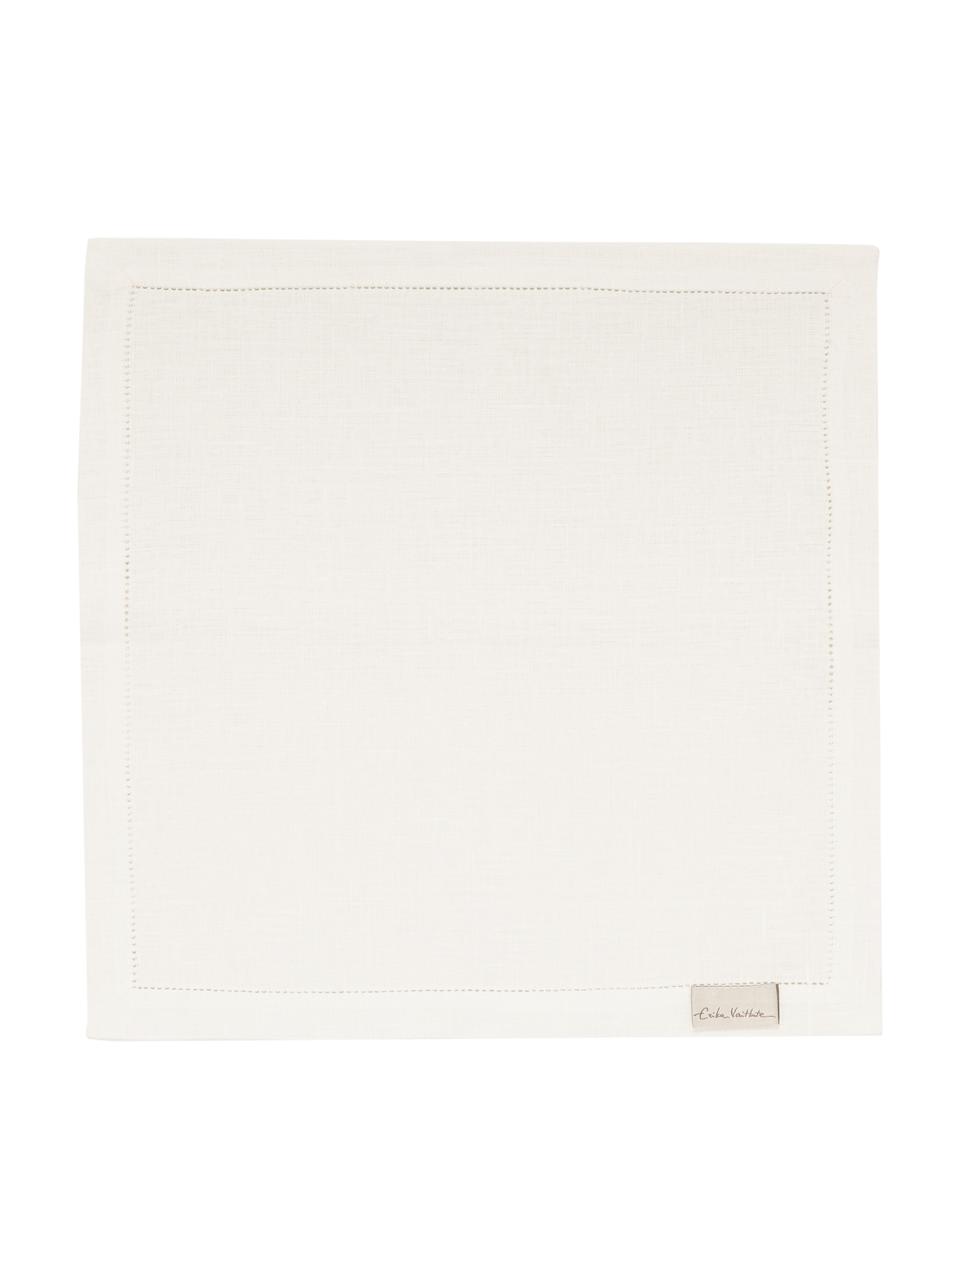 Sevilletas de lino Alanta, 6 pzas., Blanco crema, An 42 x L 42 cm